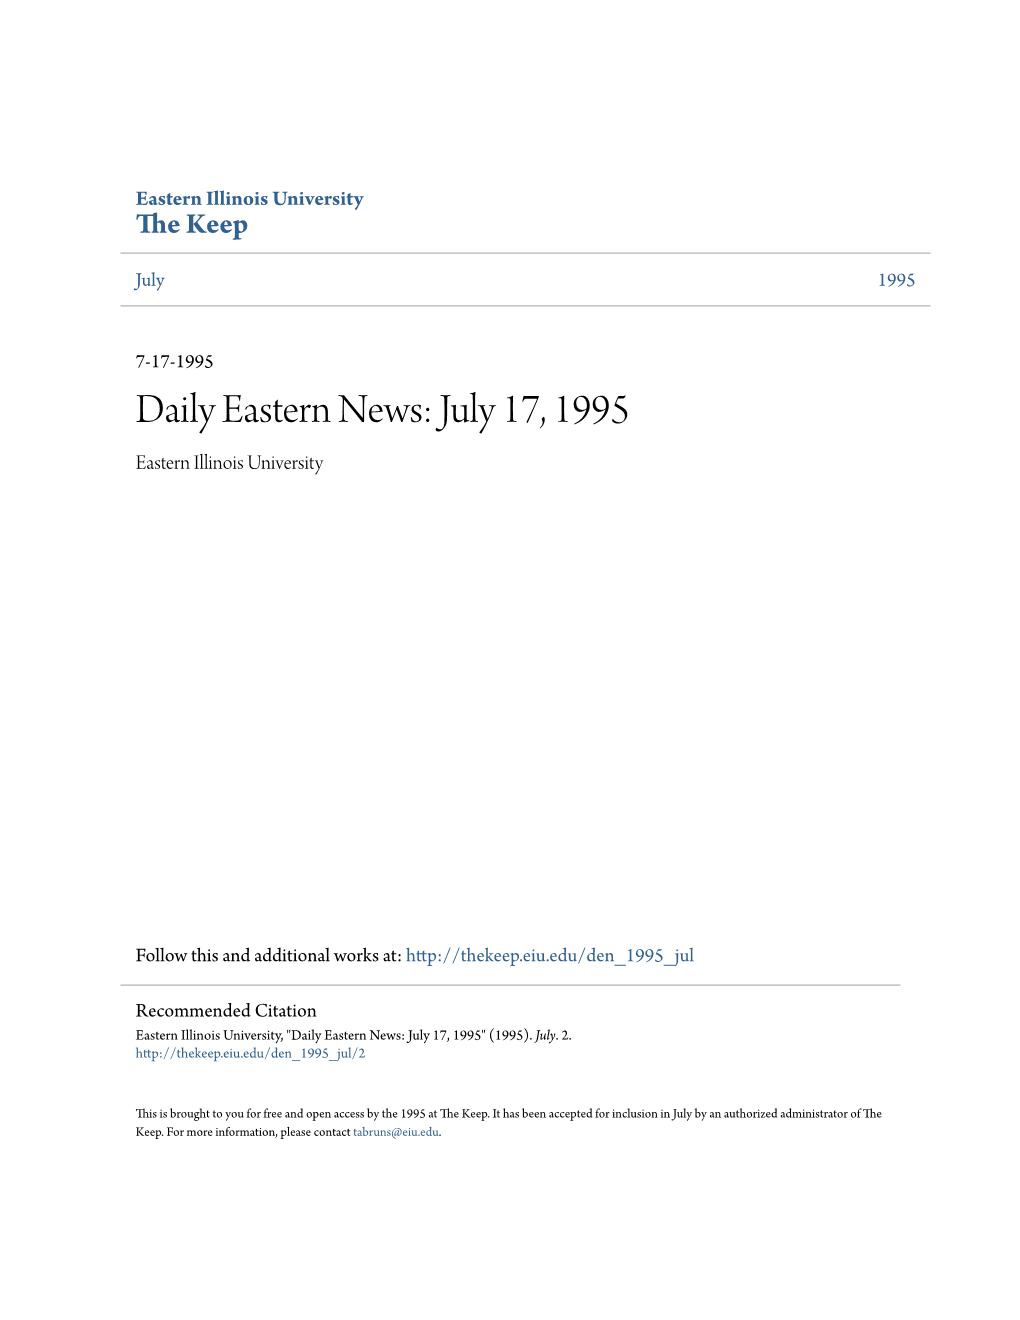 Daily Eastern News: July 17, 1995 Eastern Illinois University